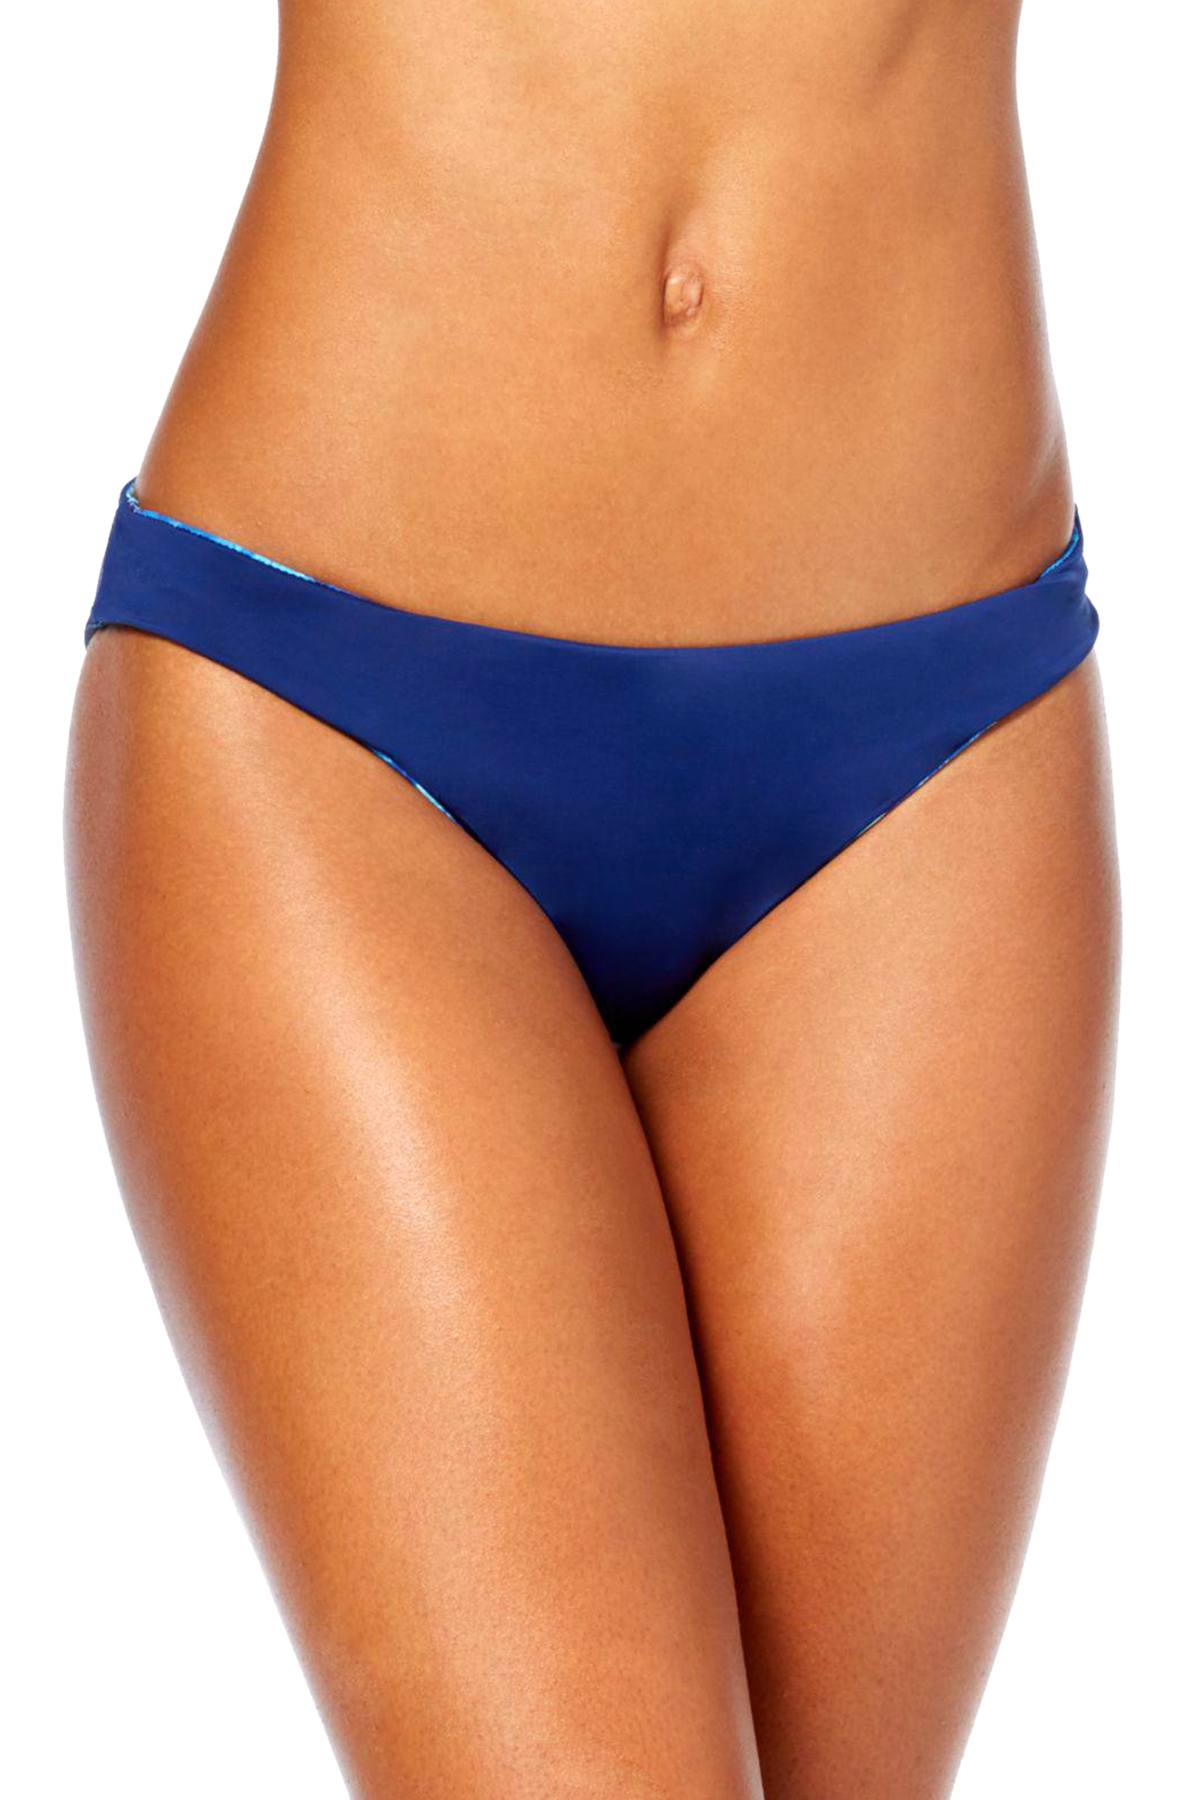 Lucky Brand Ocean Blue High Vibes Tie-Dyed Reversible Bikini Bottom